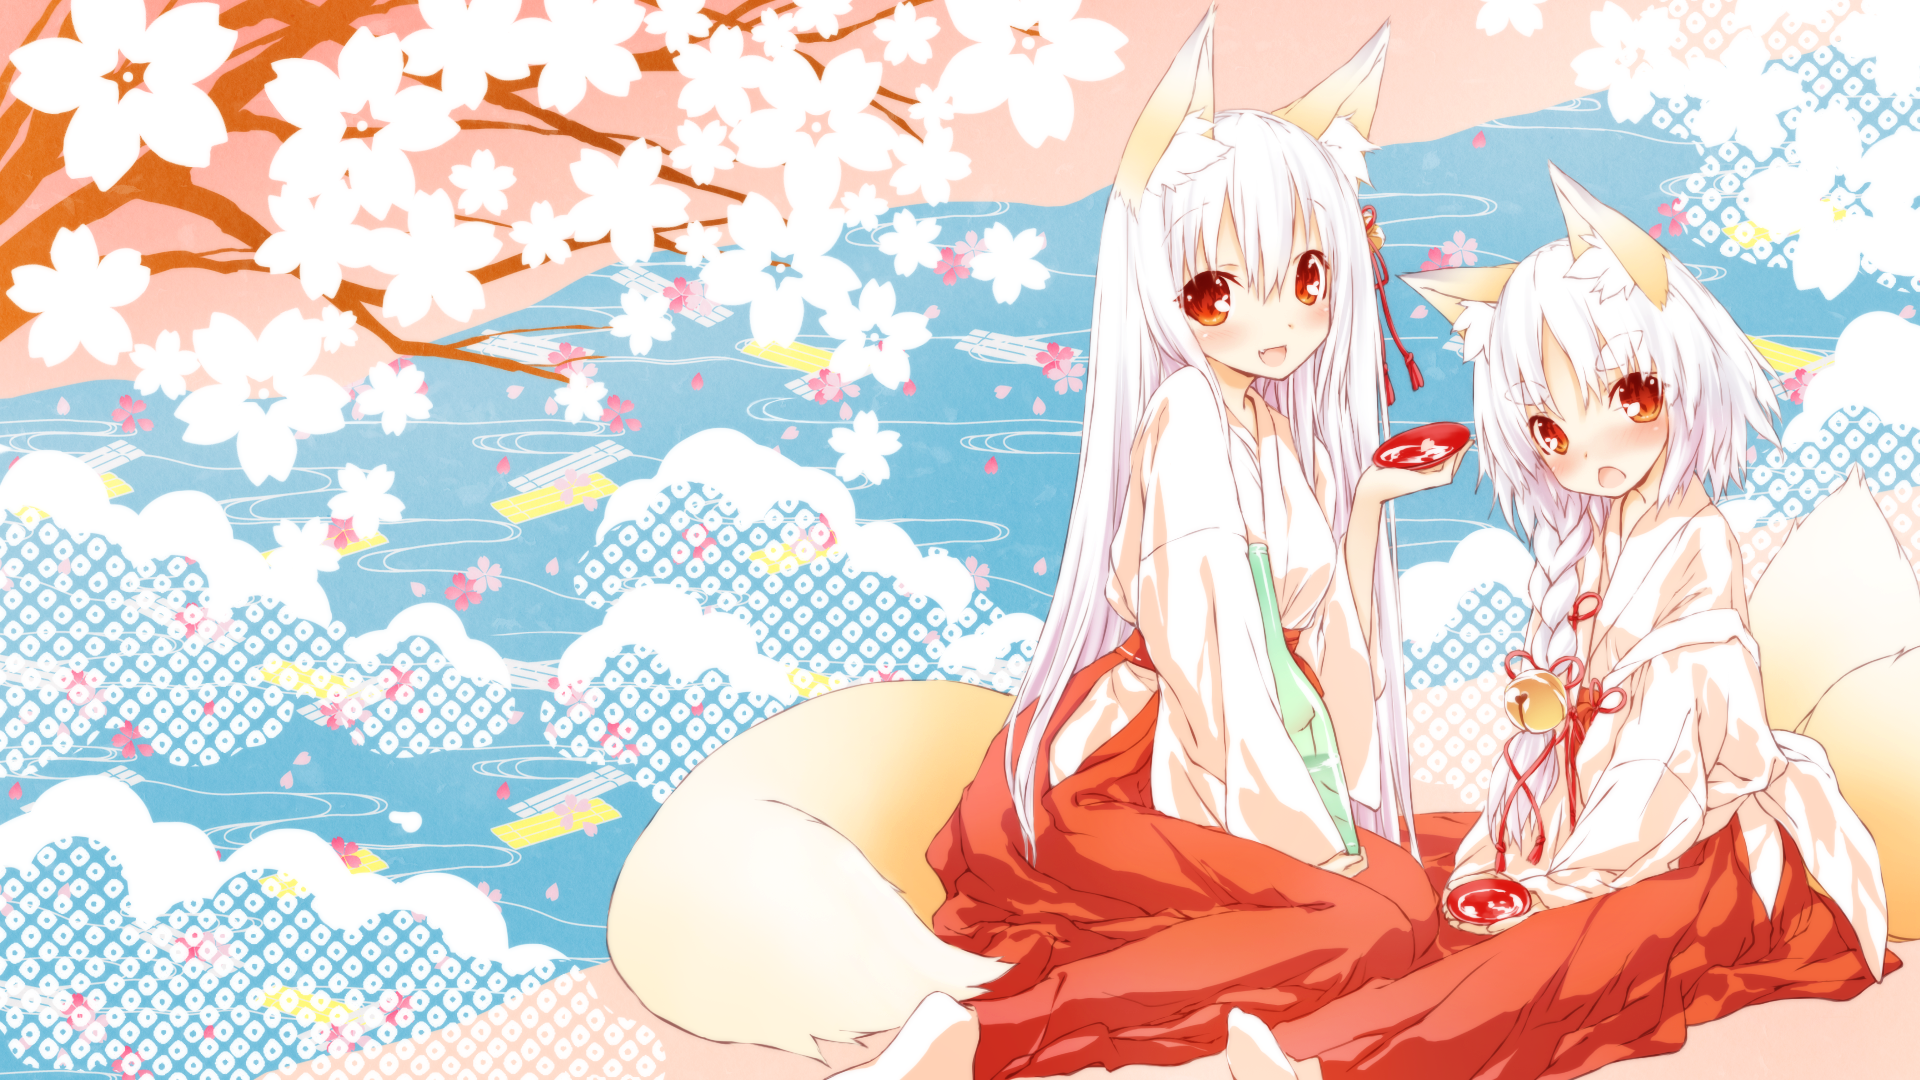 anime fox girl with white hair